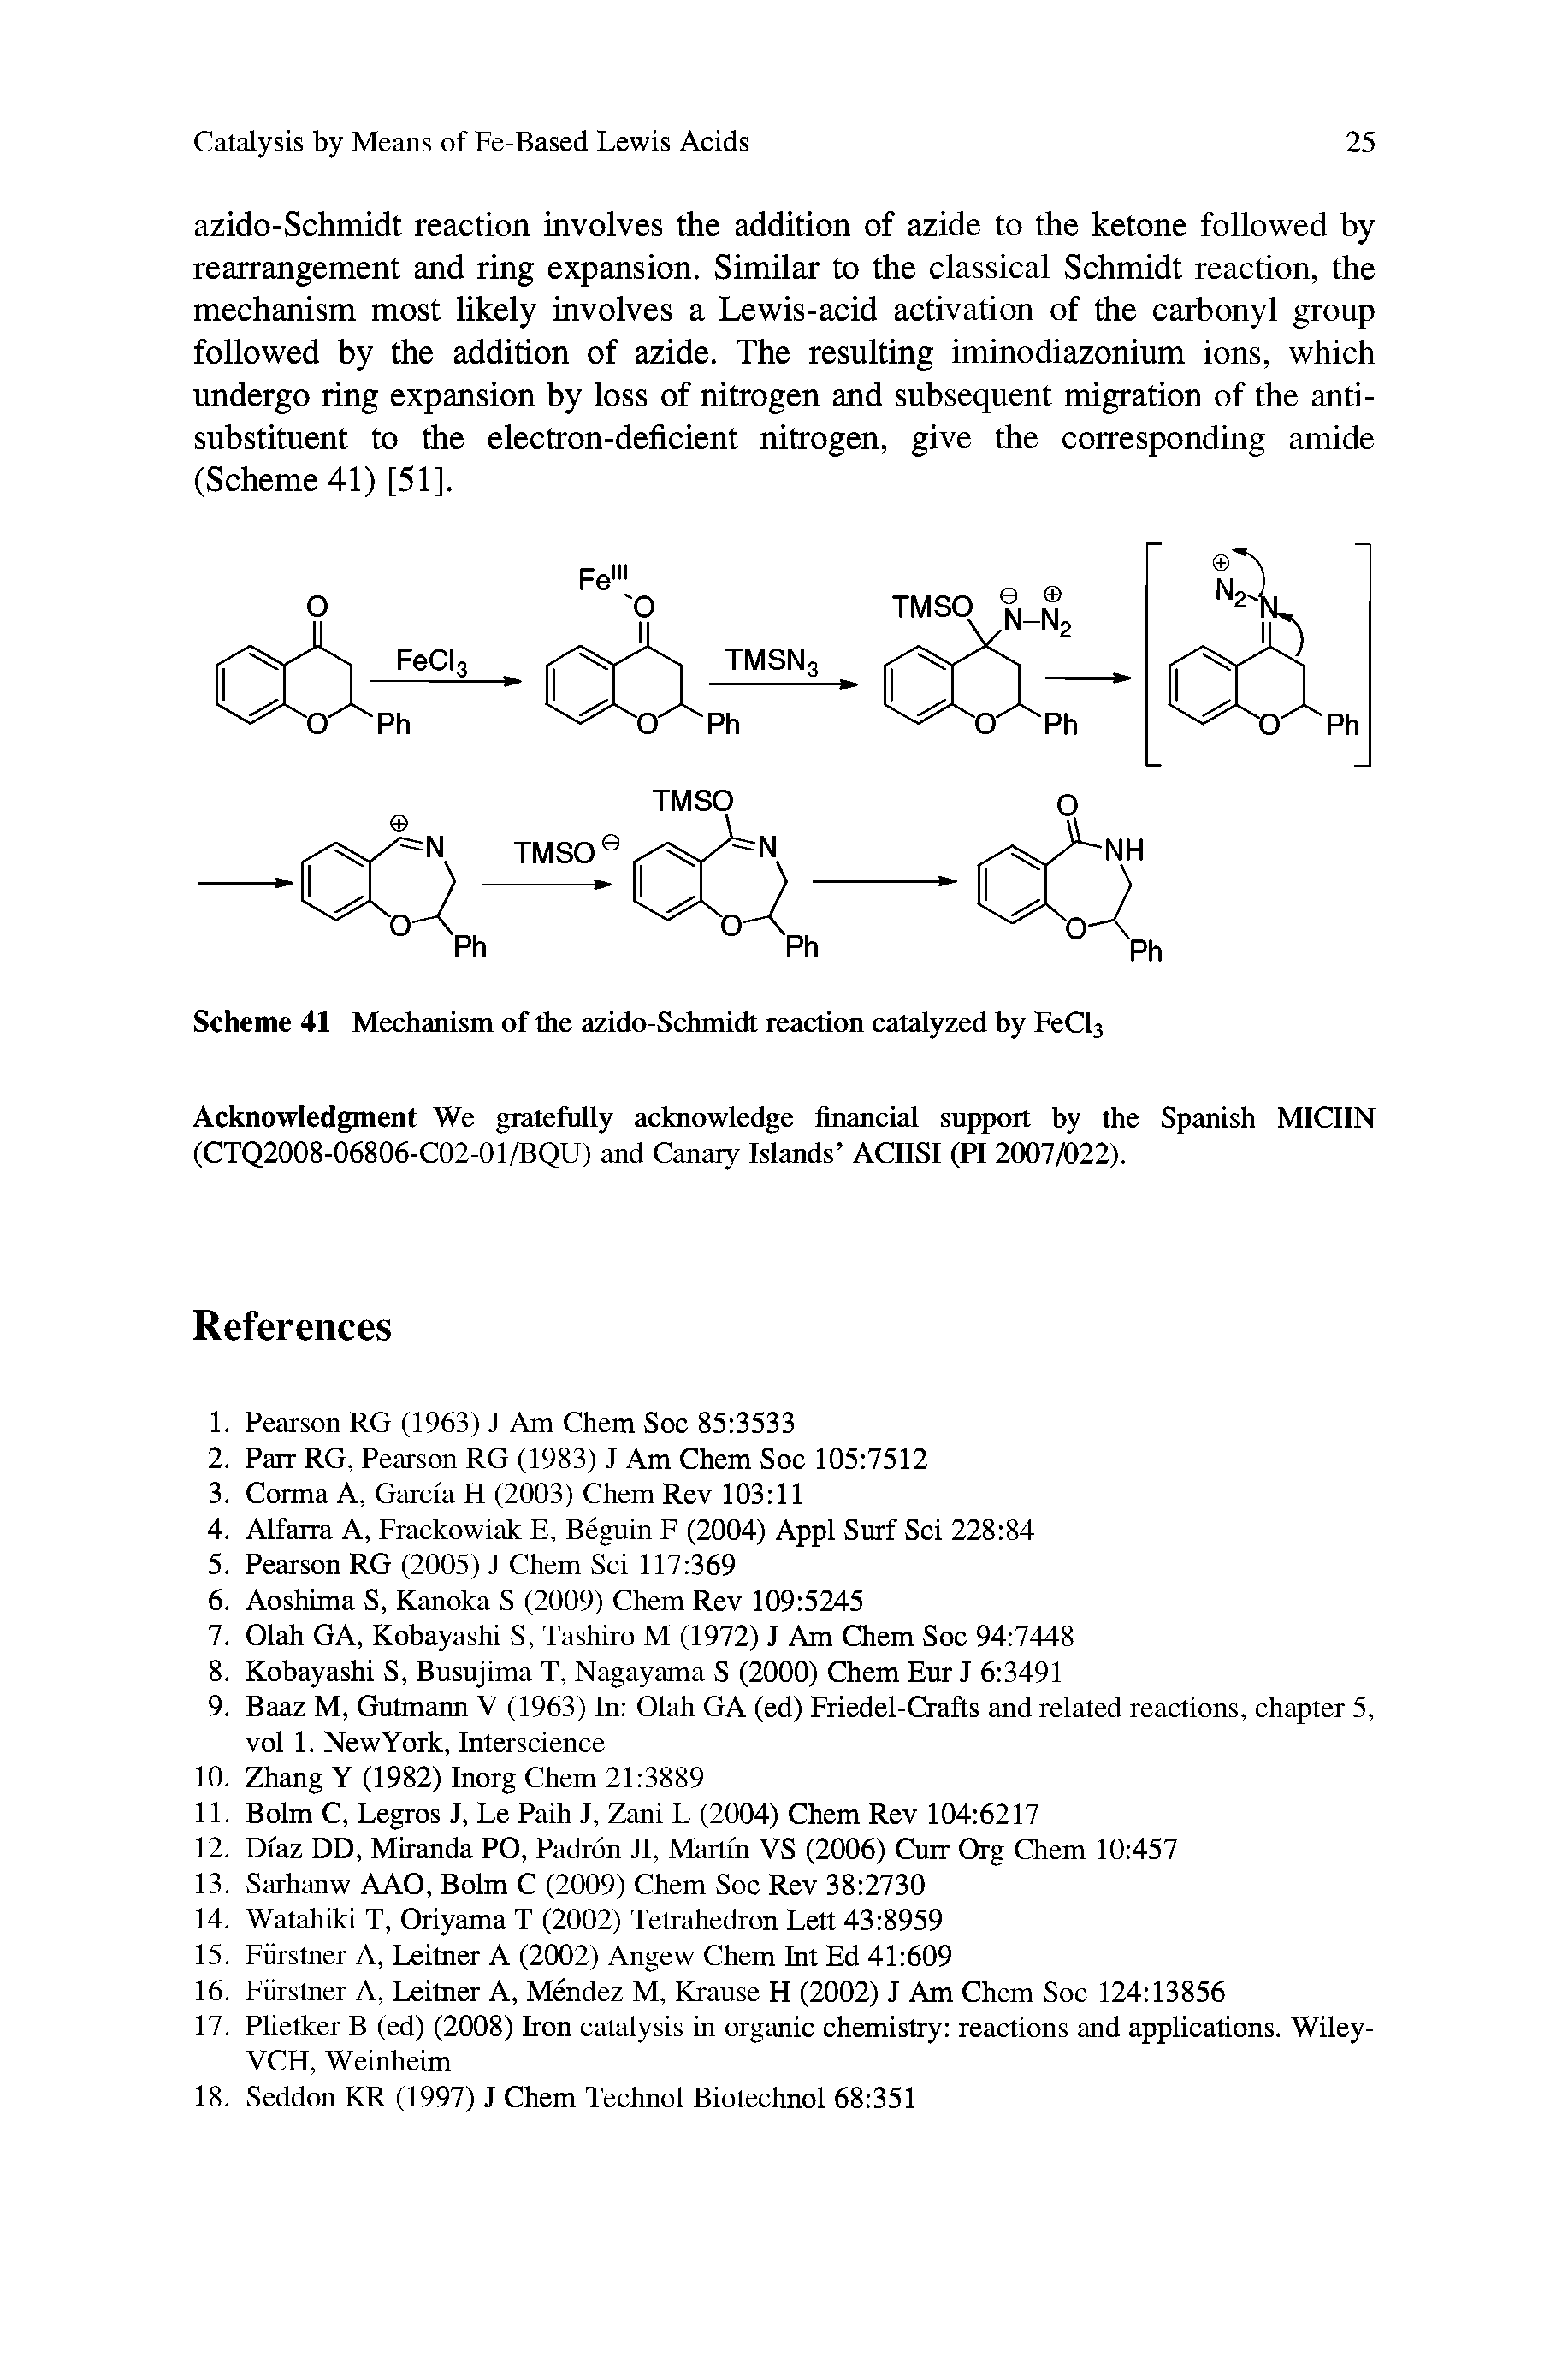 Scheme 41 Mechanism of the azido-Schmidt reaction catalyzed by FeCl3...